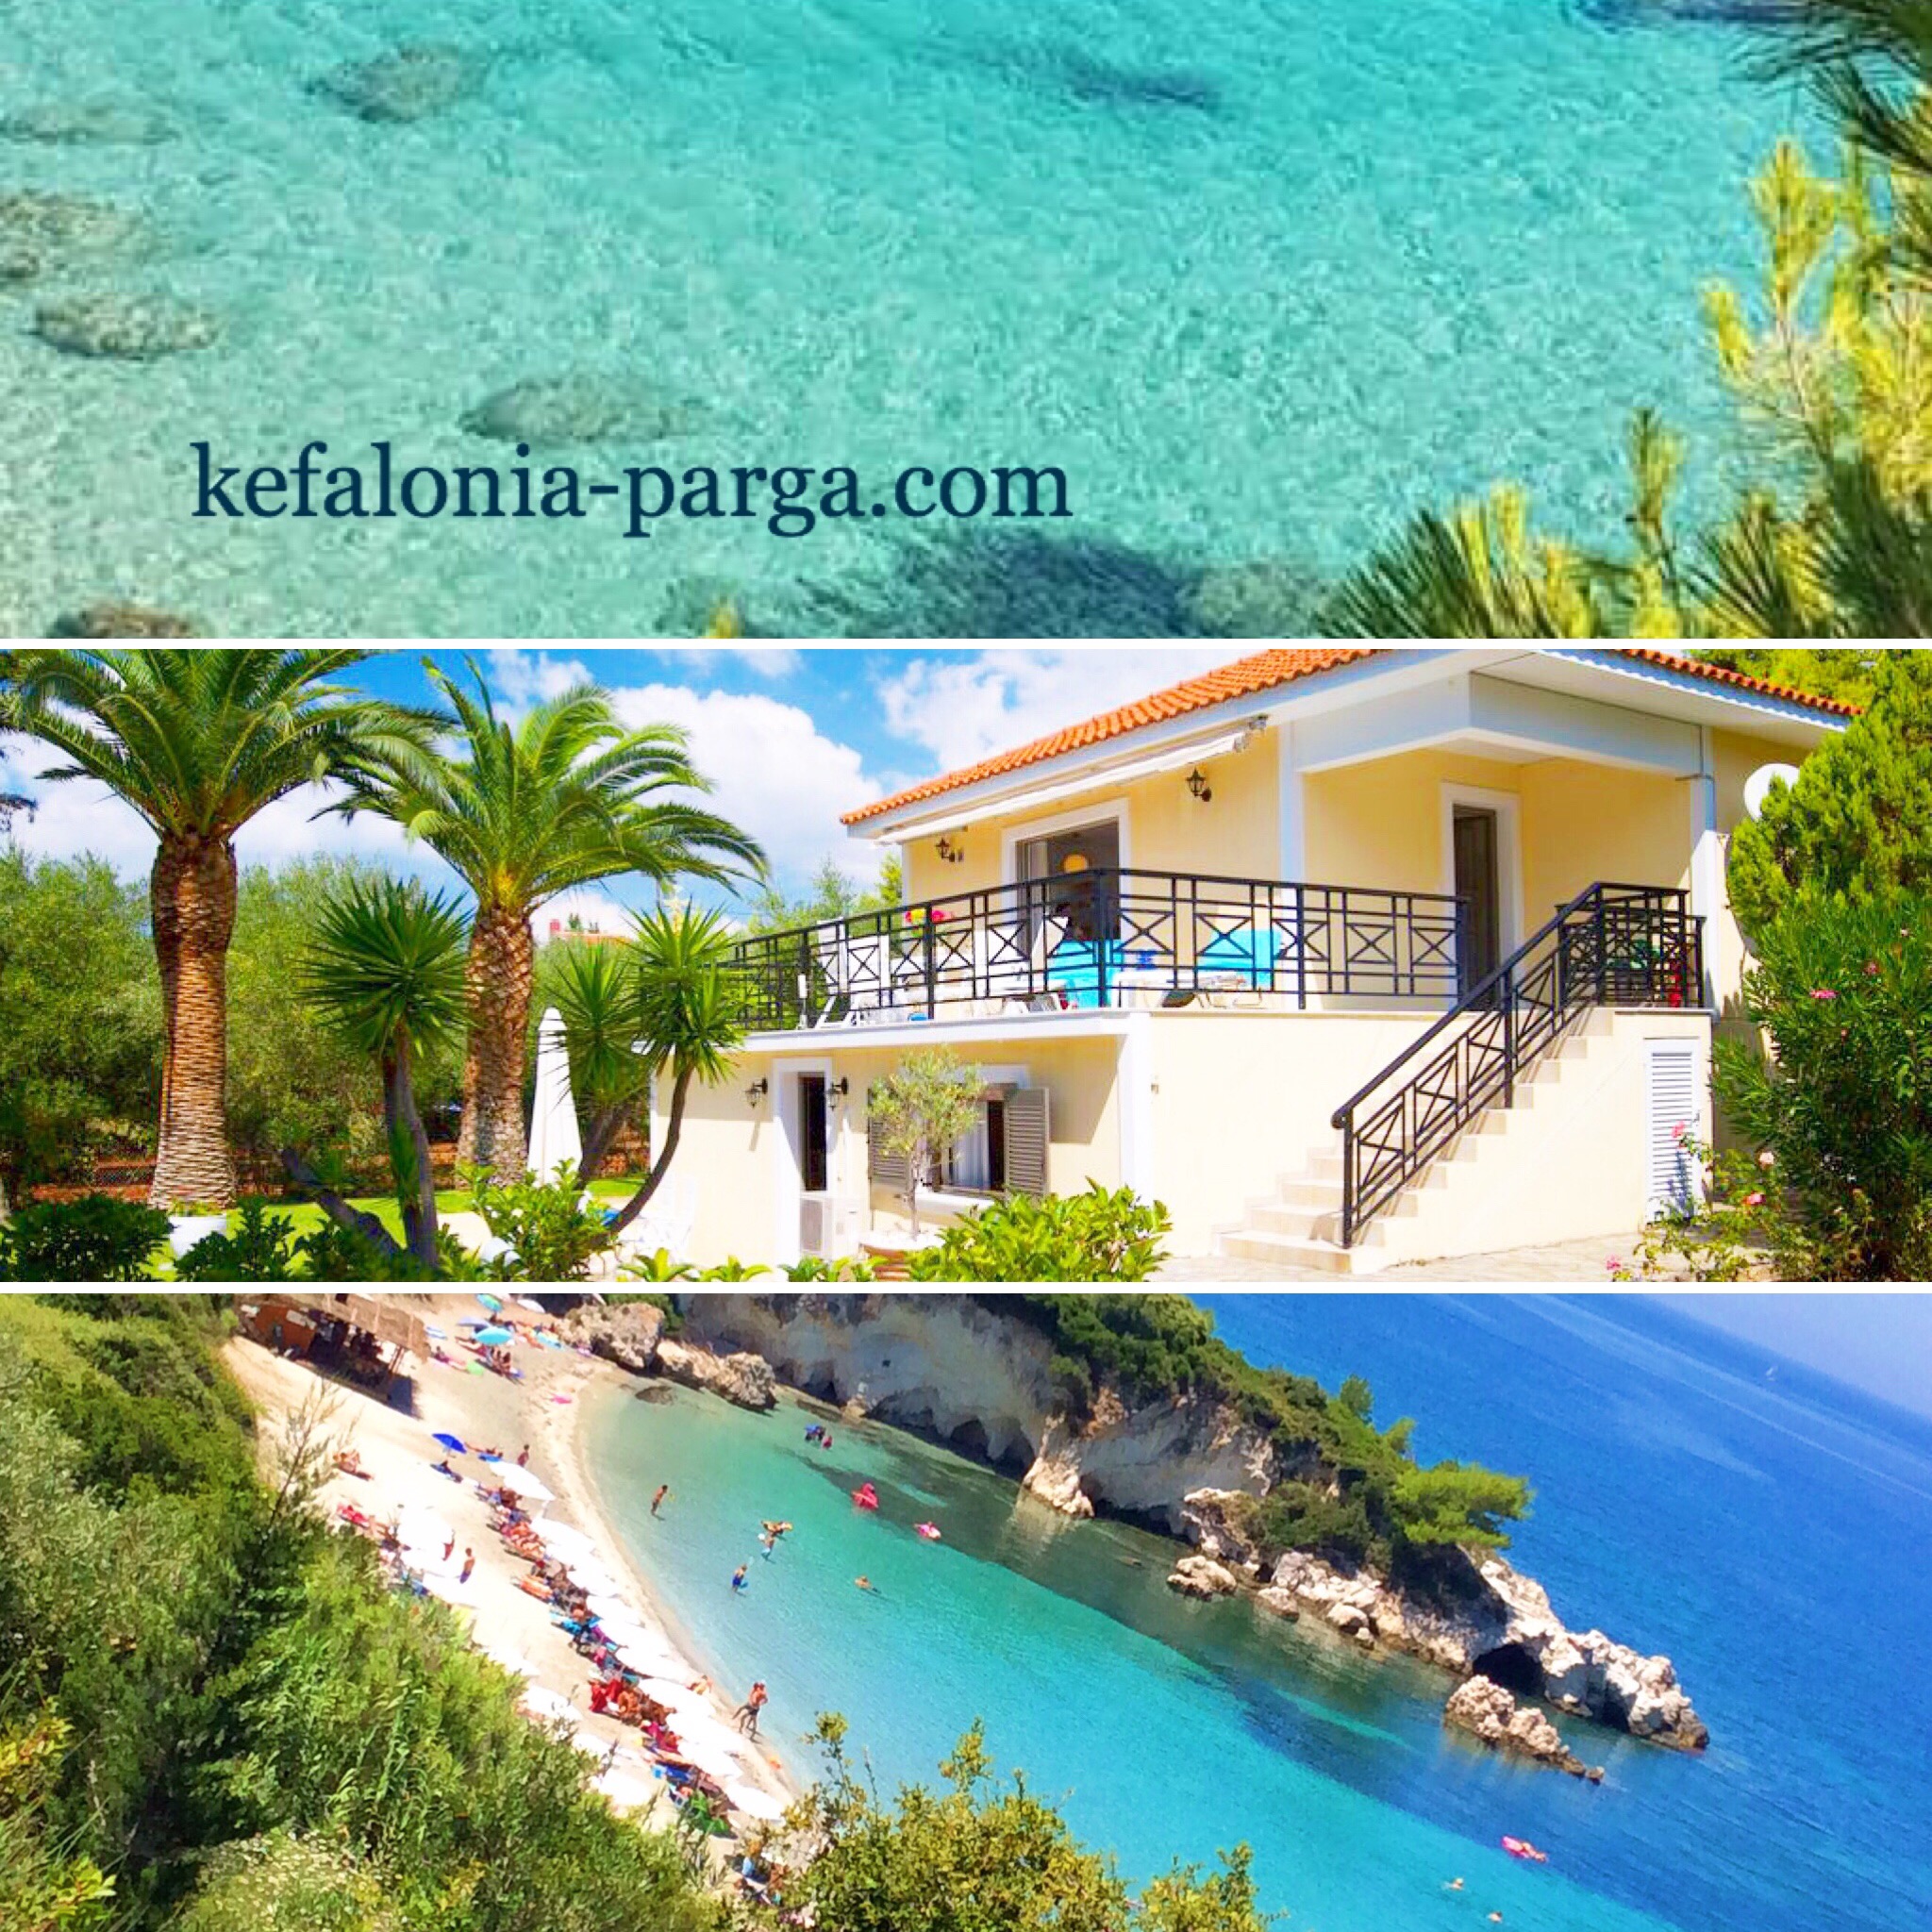 Kefalonia holiday: spacious 3 bedroom apartments by Makris Gyalos beach, Lassi. Greece vacations.